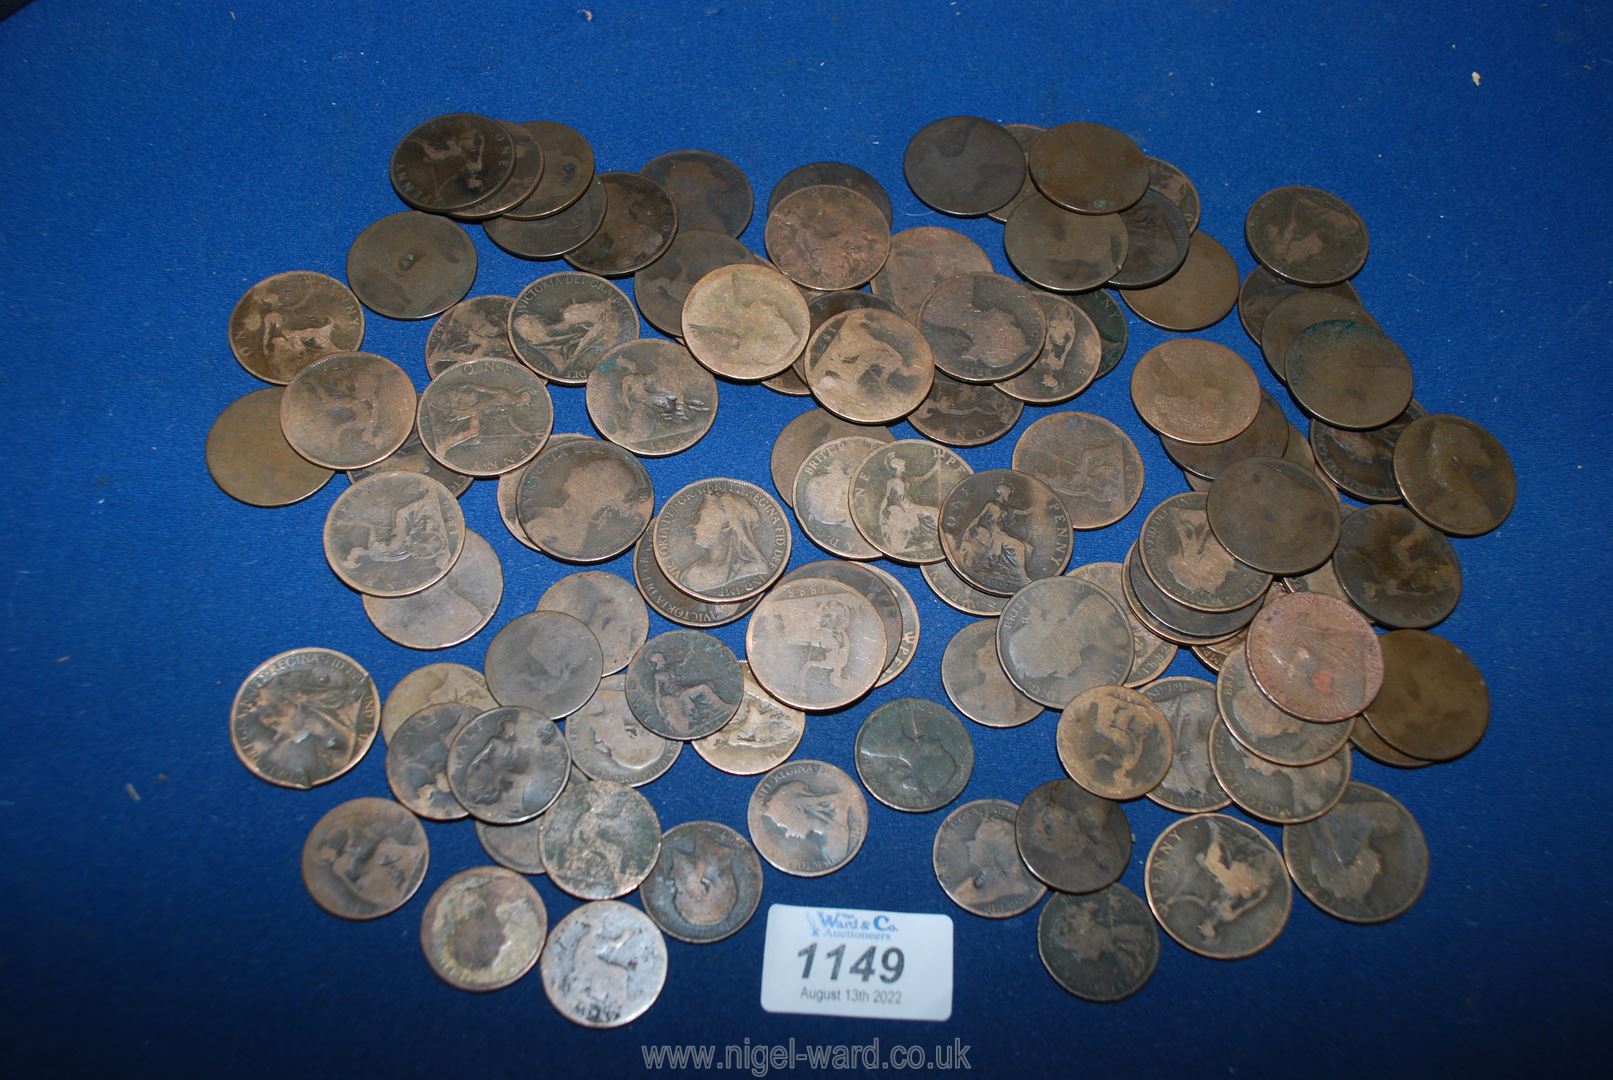 80 Queen Victoria Pennies together with 16 Queen Victoria Halfpenny pieces.